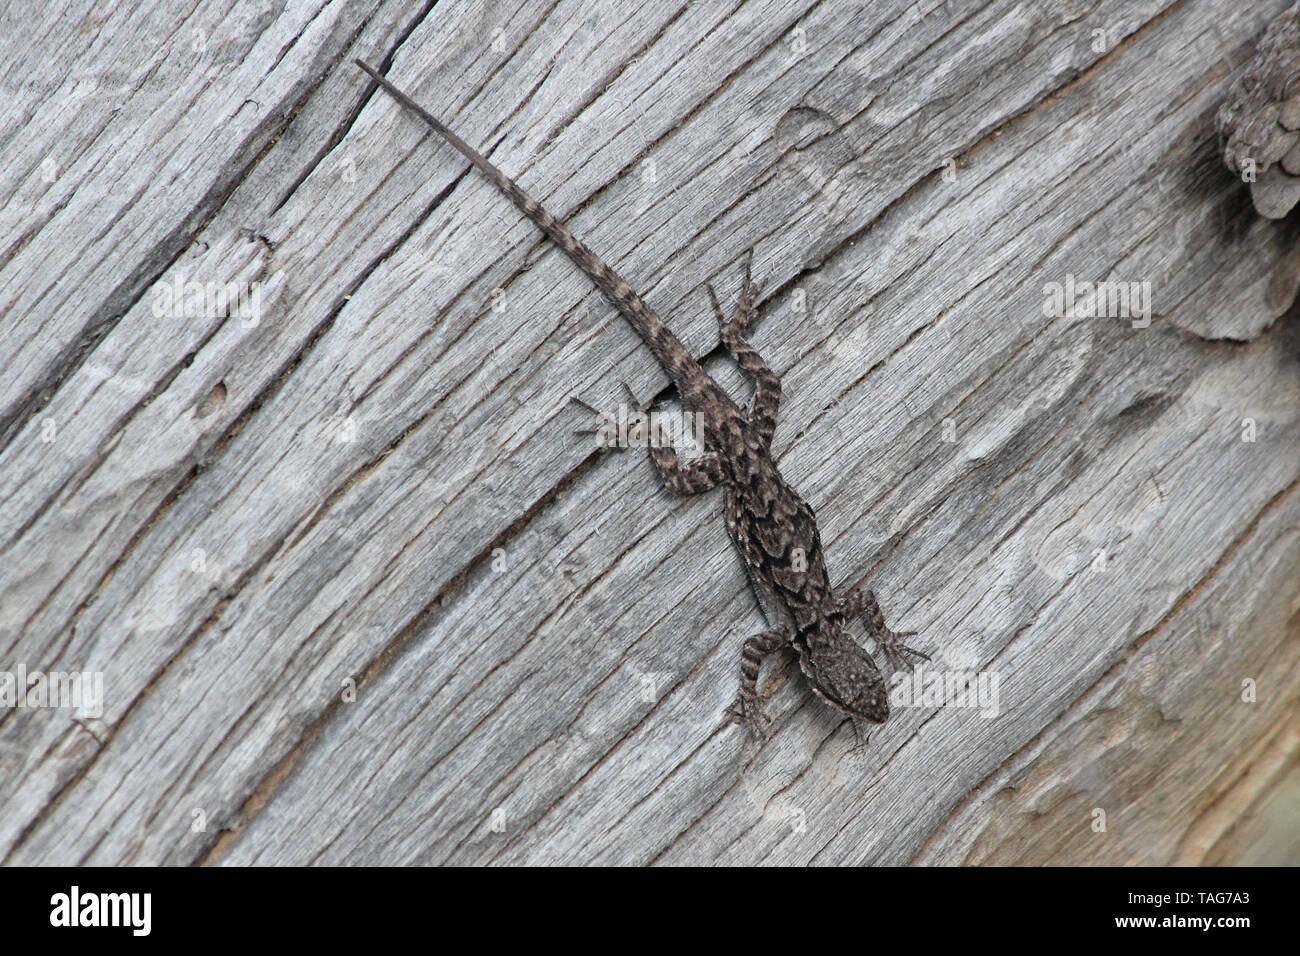 Ornate Tree Lizard (Urosaurus ornatus) Stock Photo